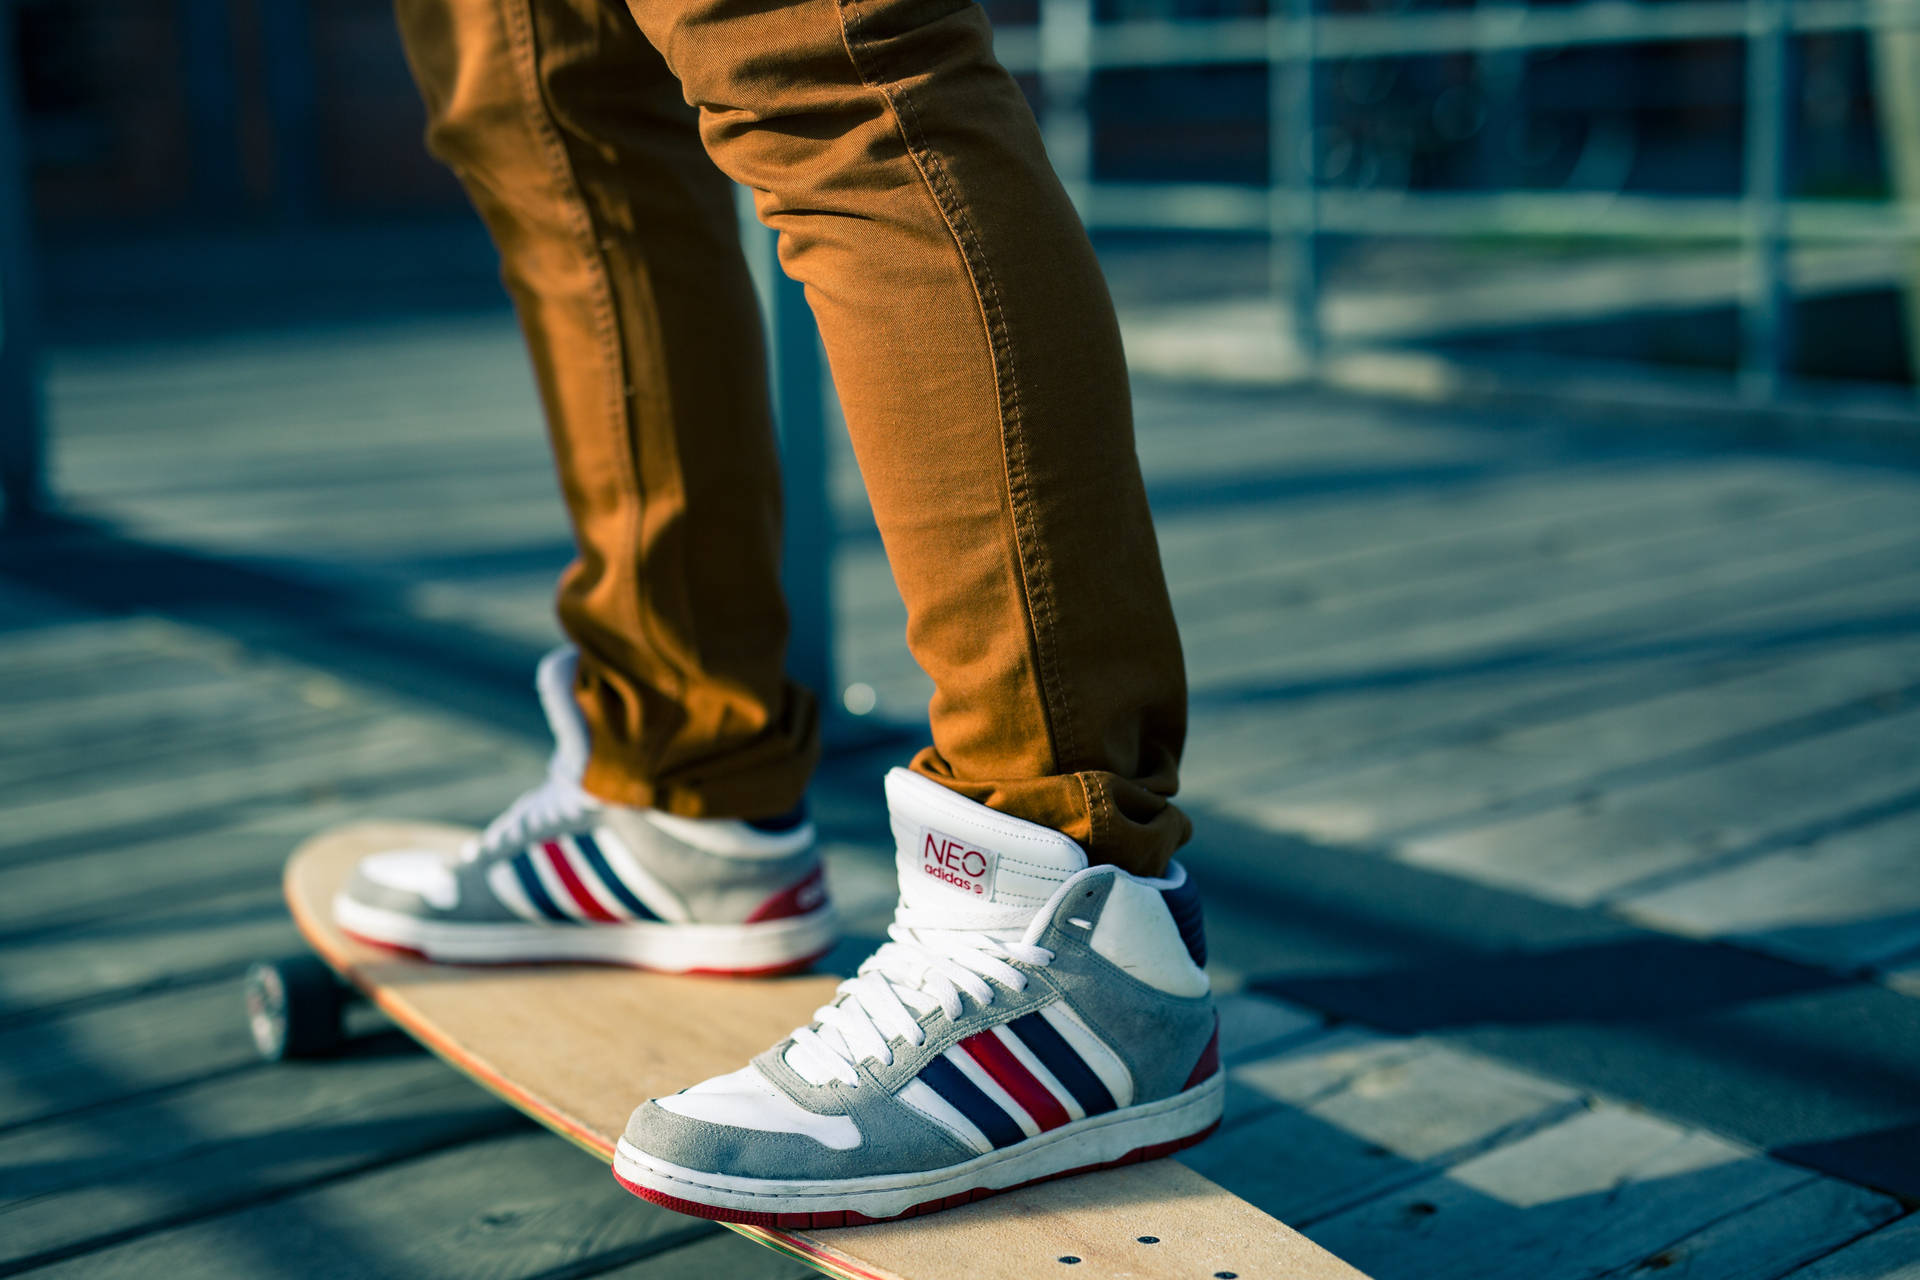 Top 999+ Skateboard Wallpaper Full HD, 4K✅Free to Use